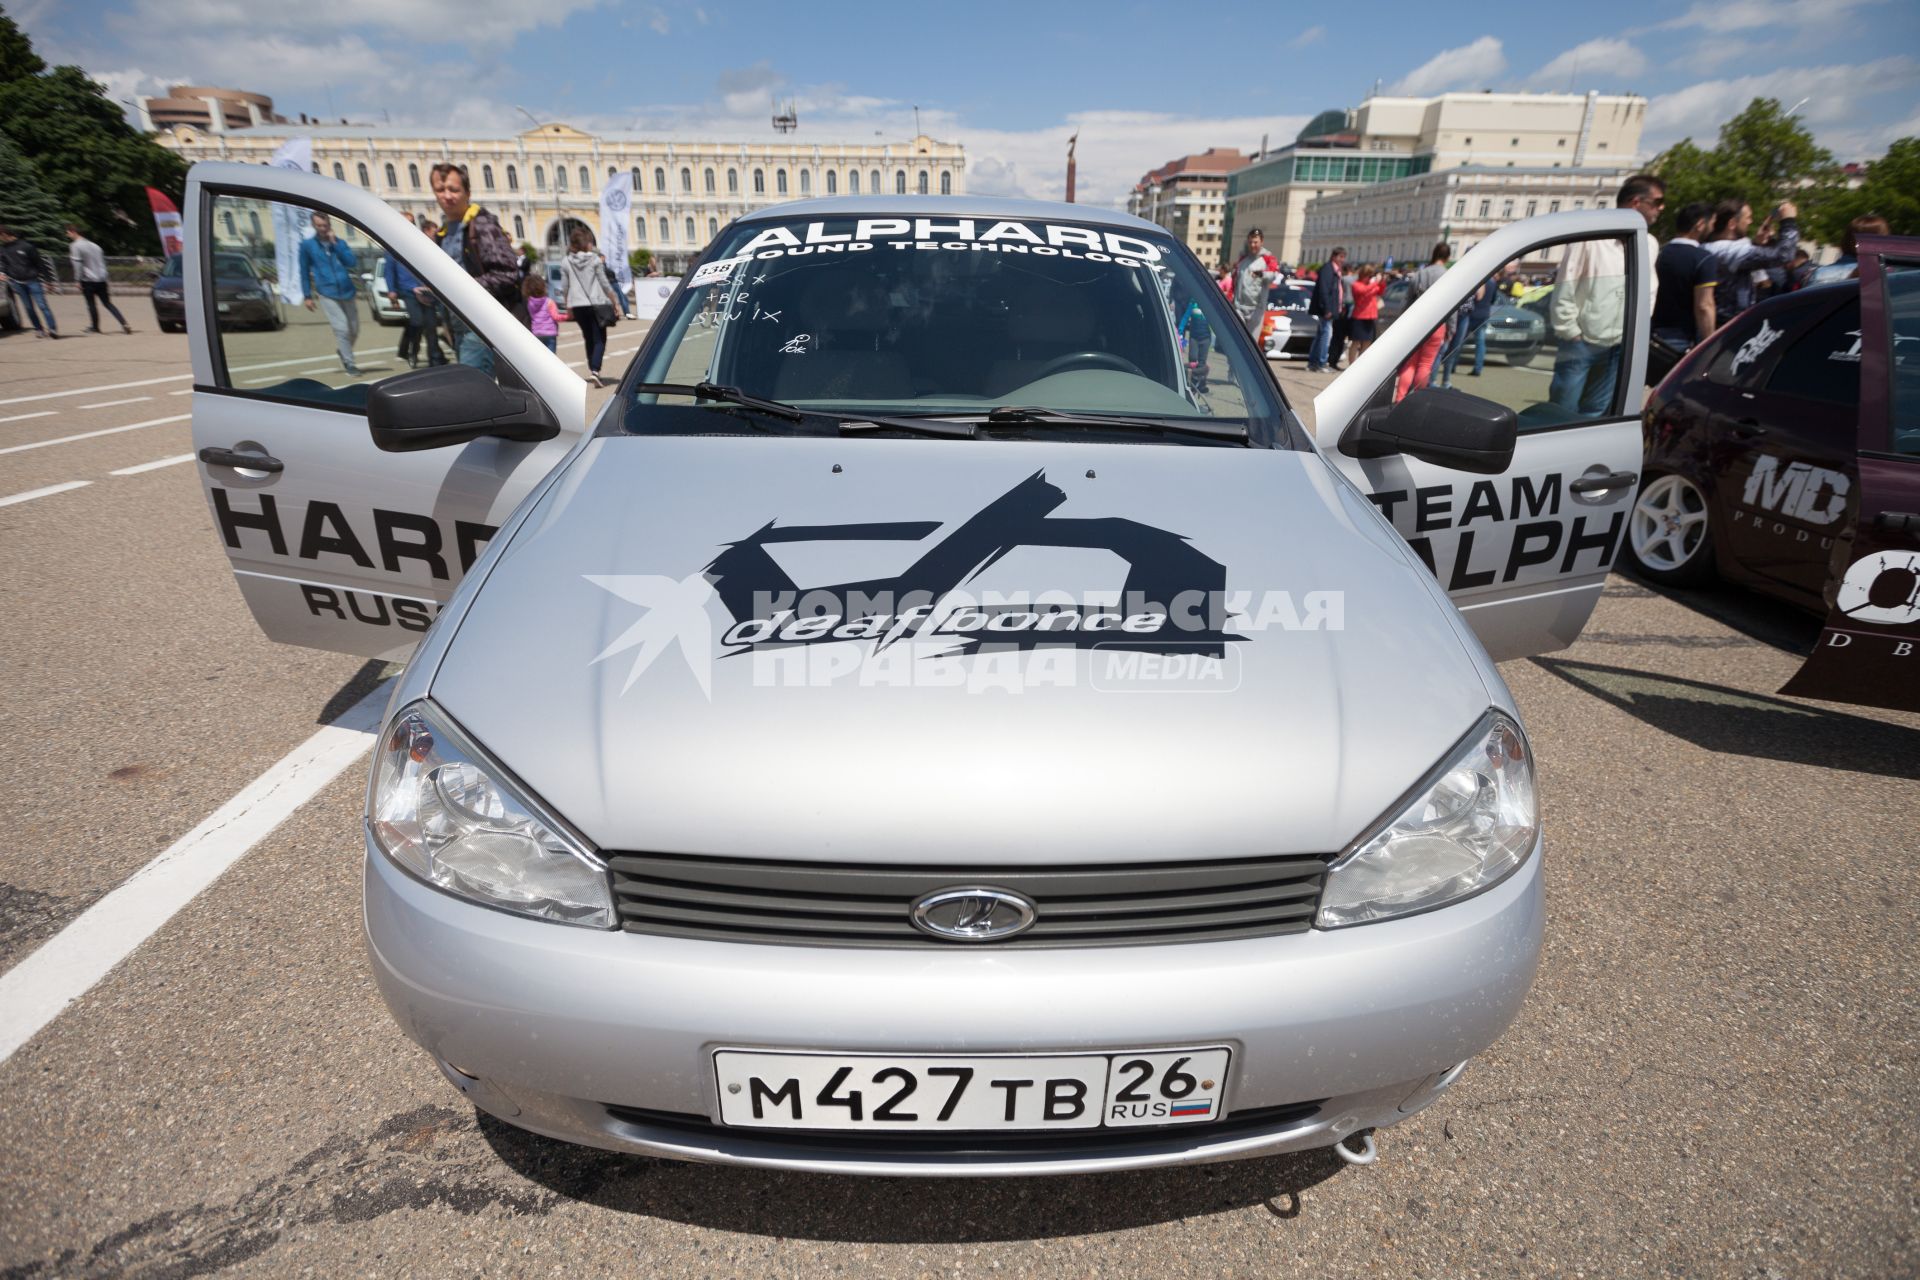 Ставрополь. Автомобиль  Lada Kalina на фестивале `Парковка` на площади Ленина.